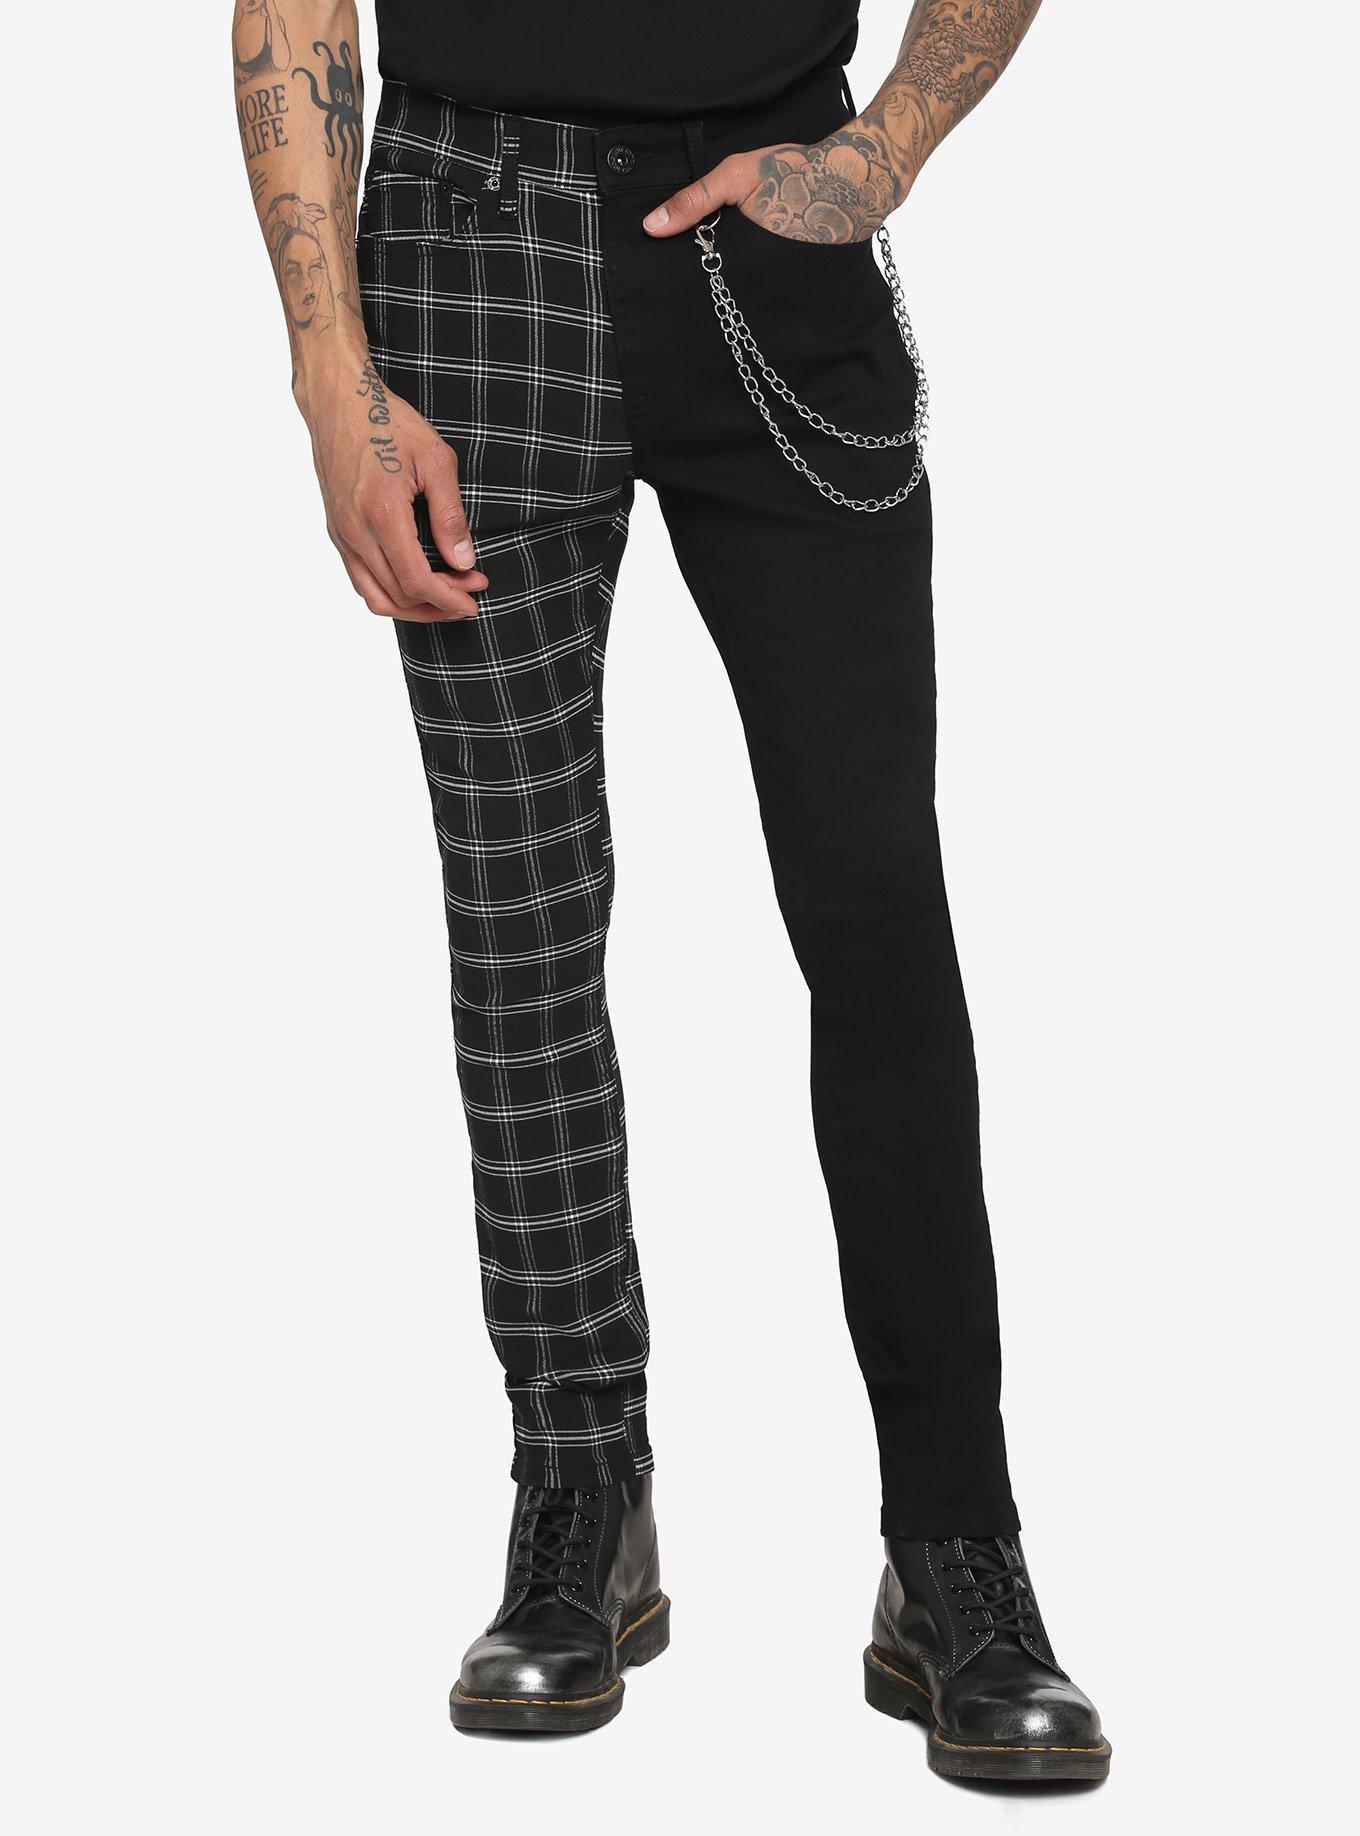 Black & White Grid Split Leg Chain Stinger Jeans | Hot Topic